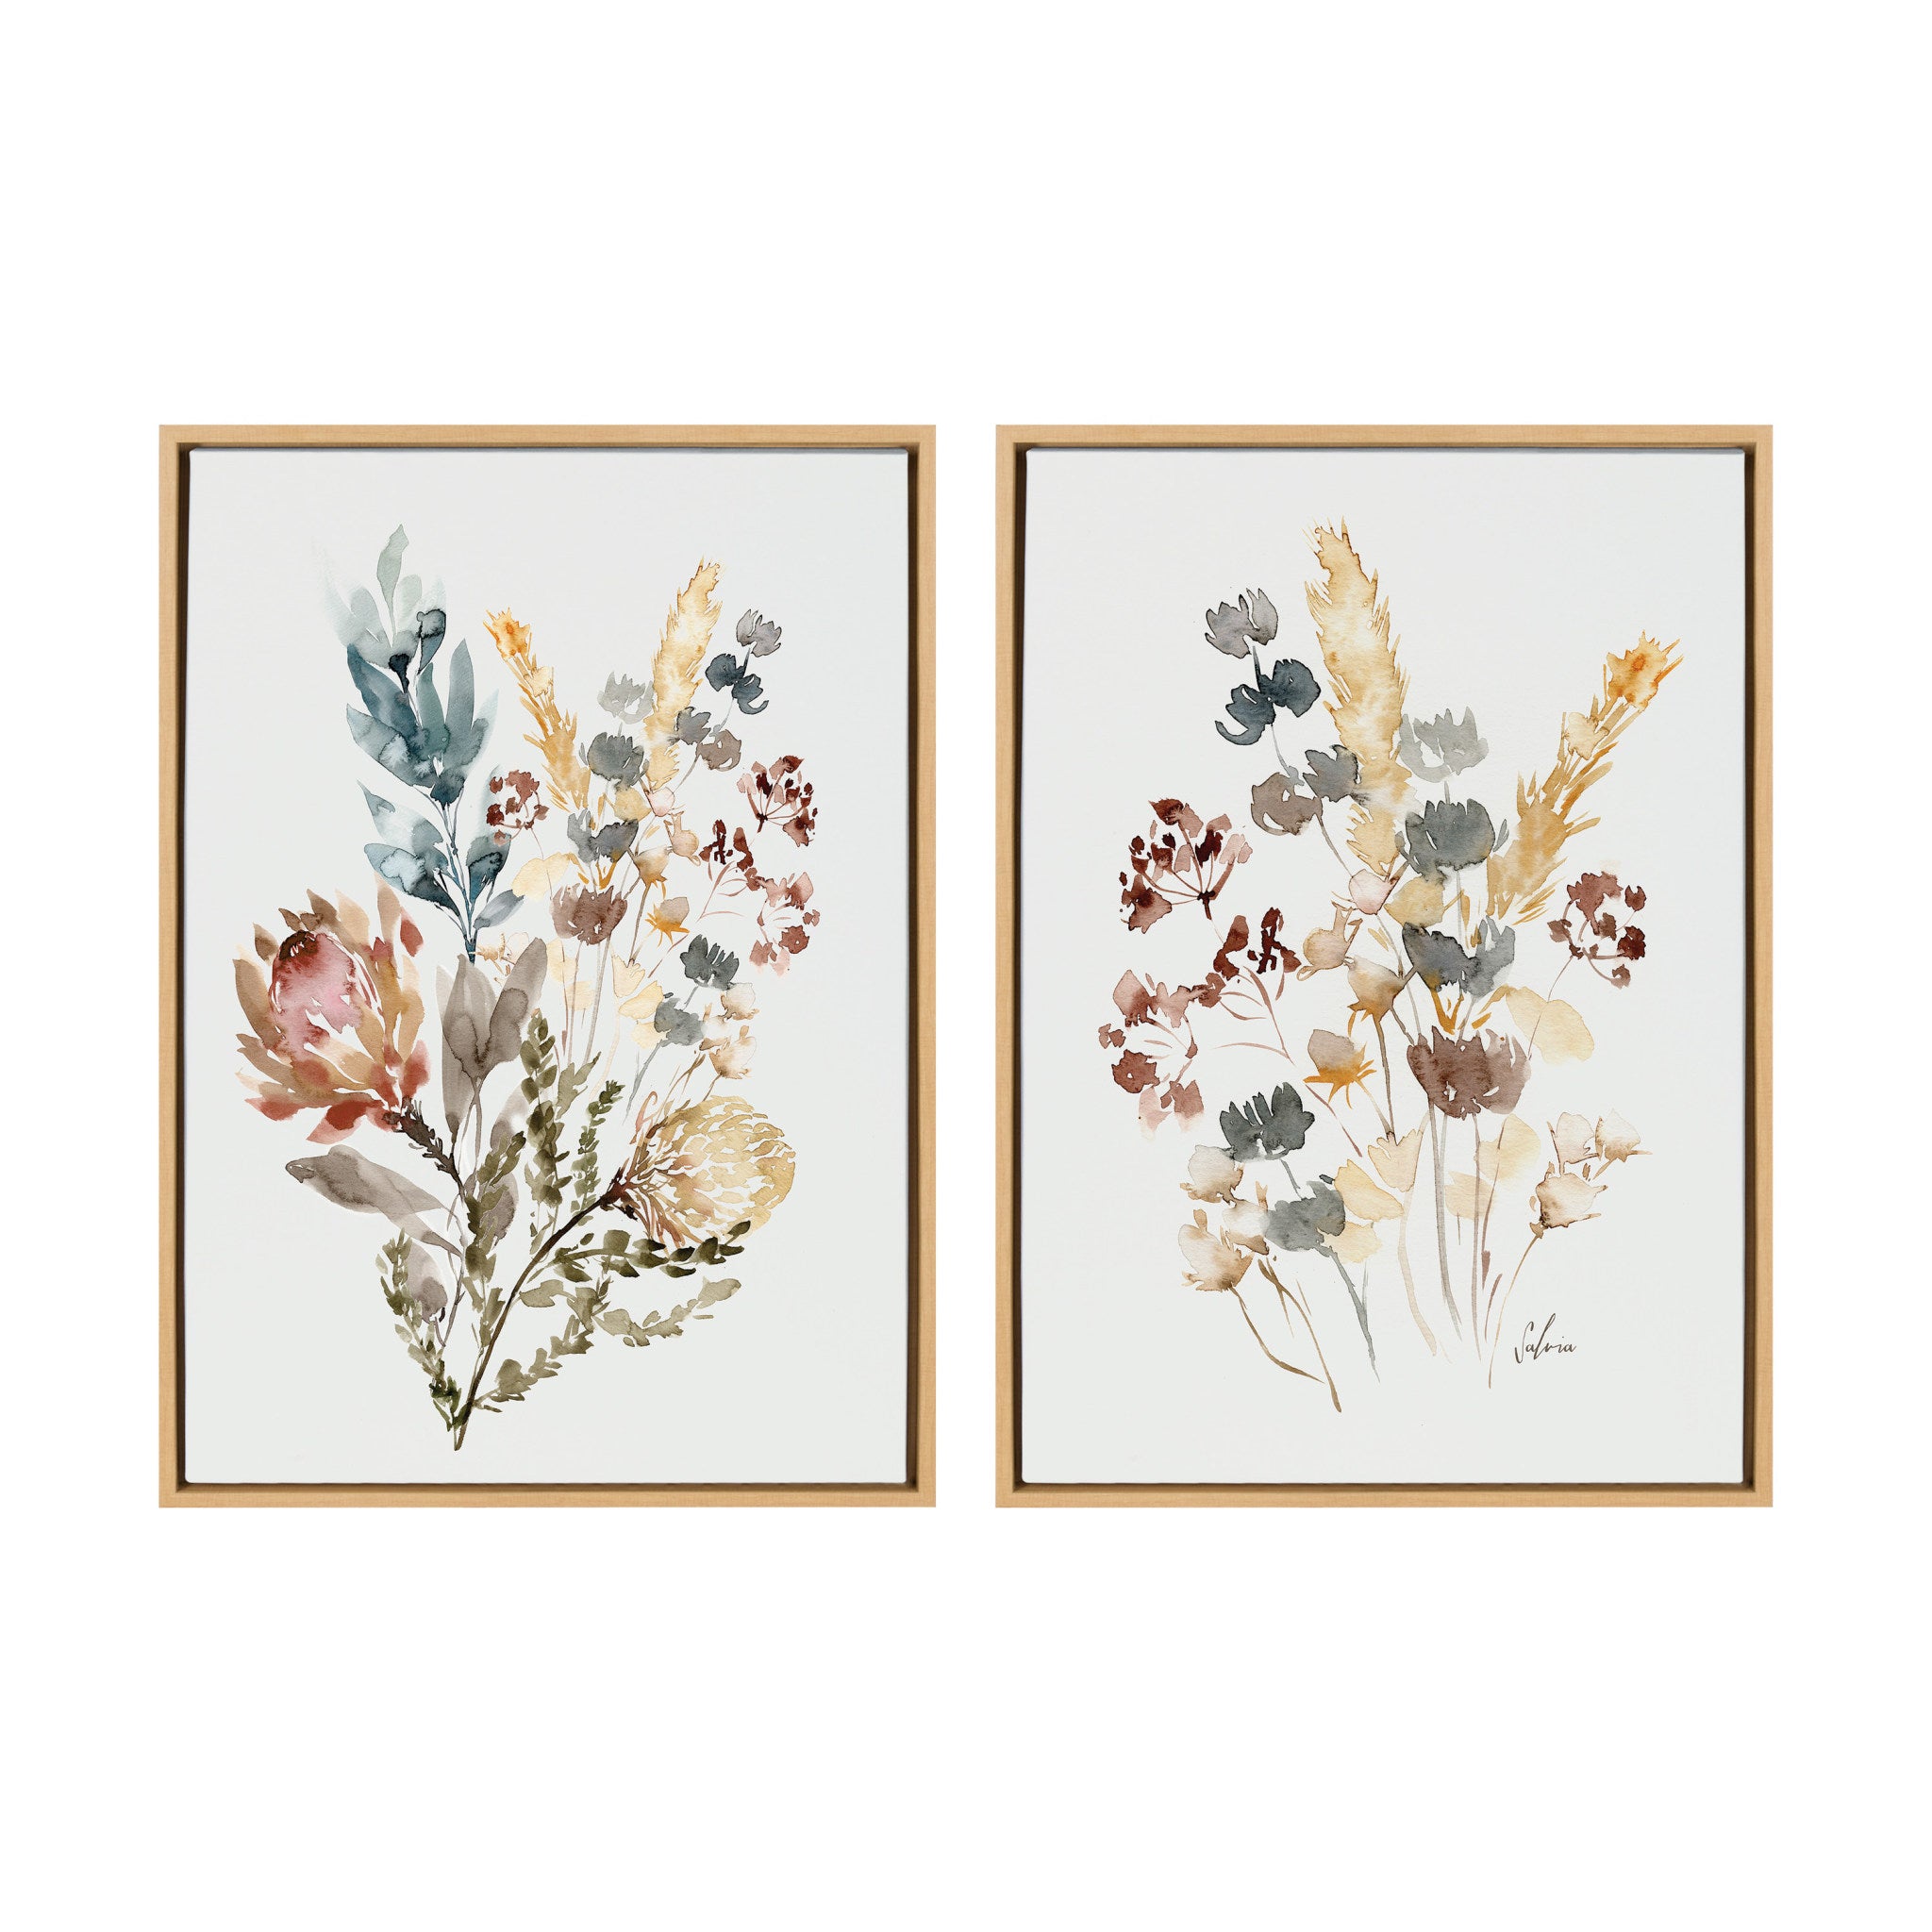 Sylvie Wildflower Bunch and Wild Salvia Framed Canvas Art Set by Sara Berrenson